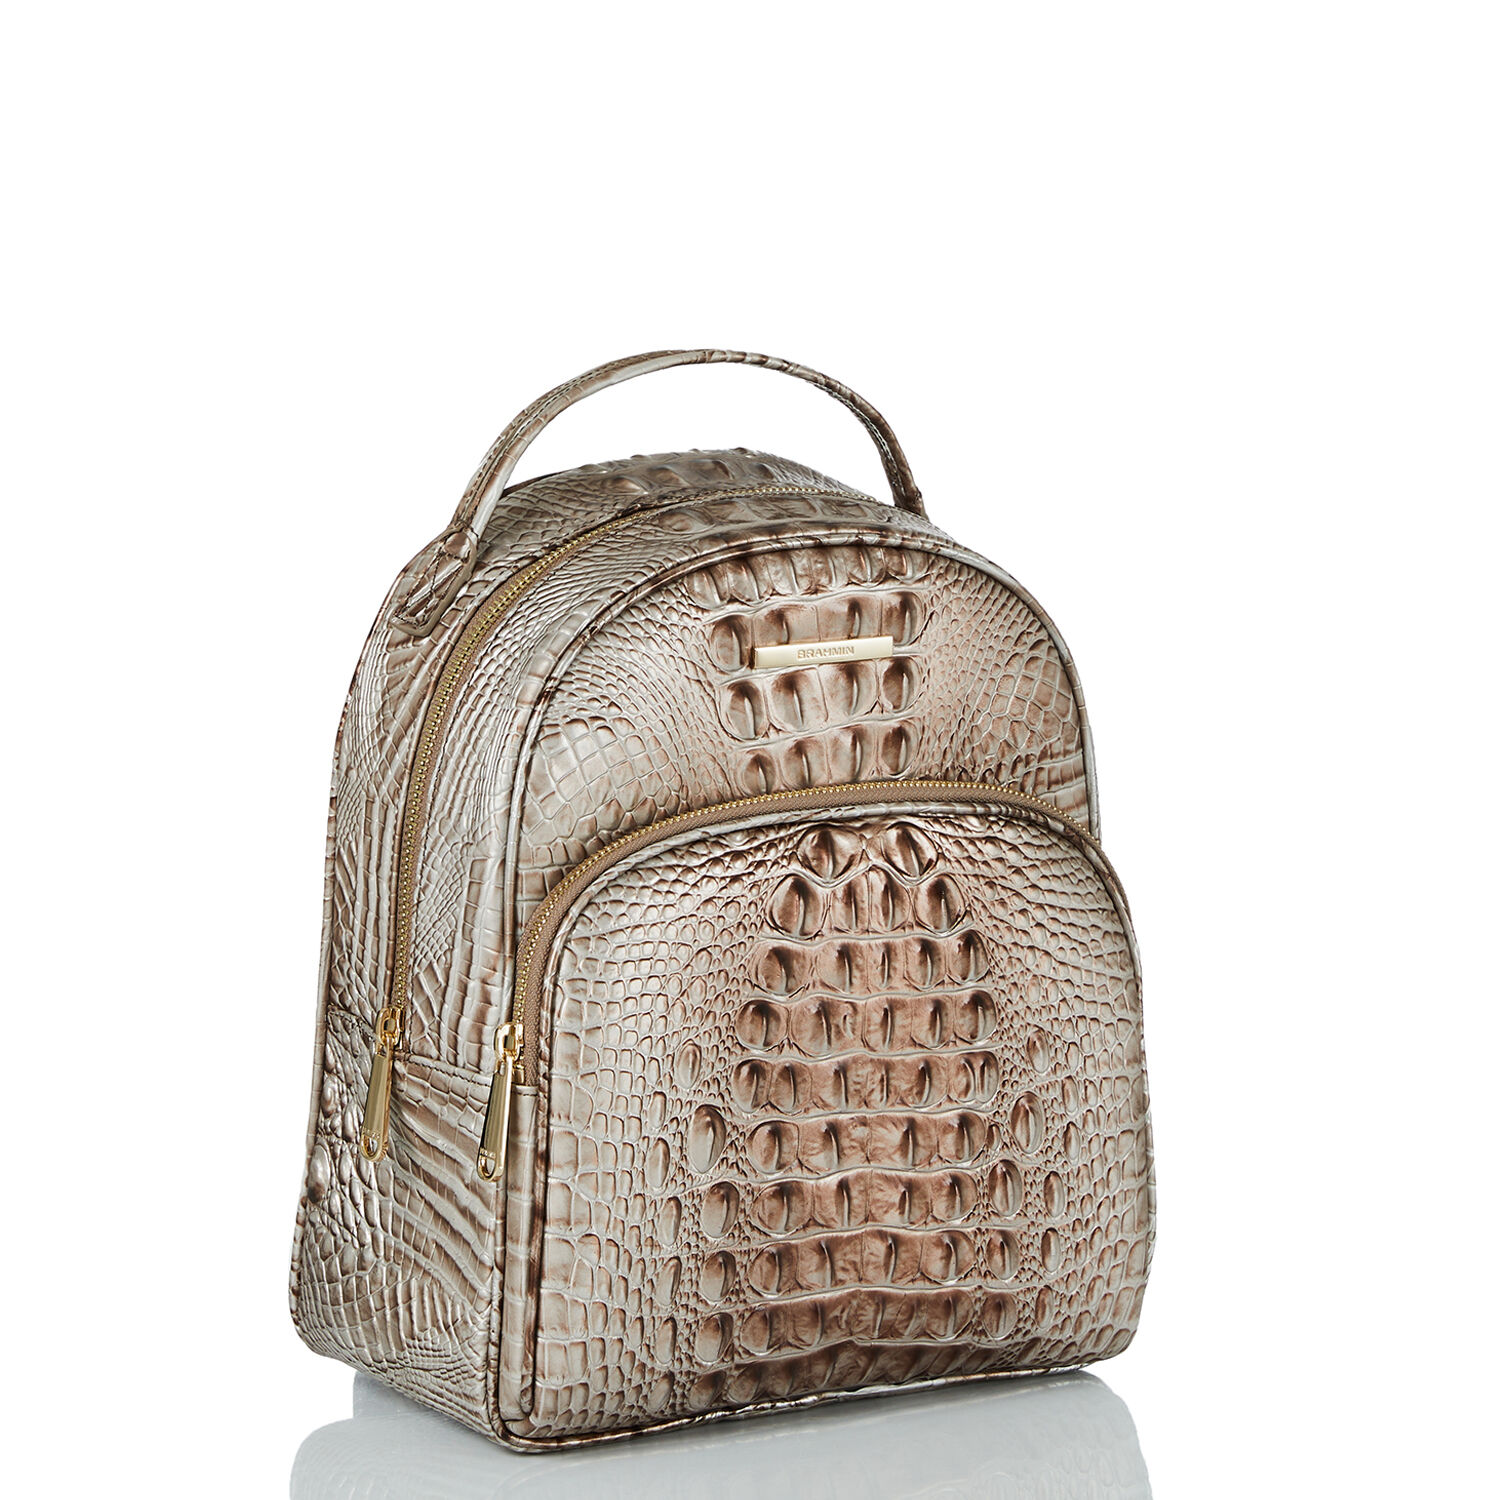 Brahmin backpack nwt - Women's handbags